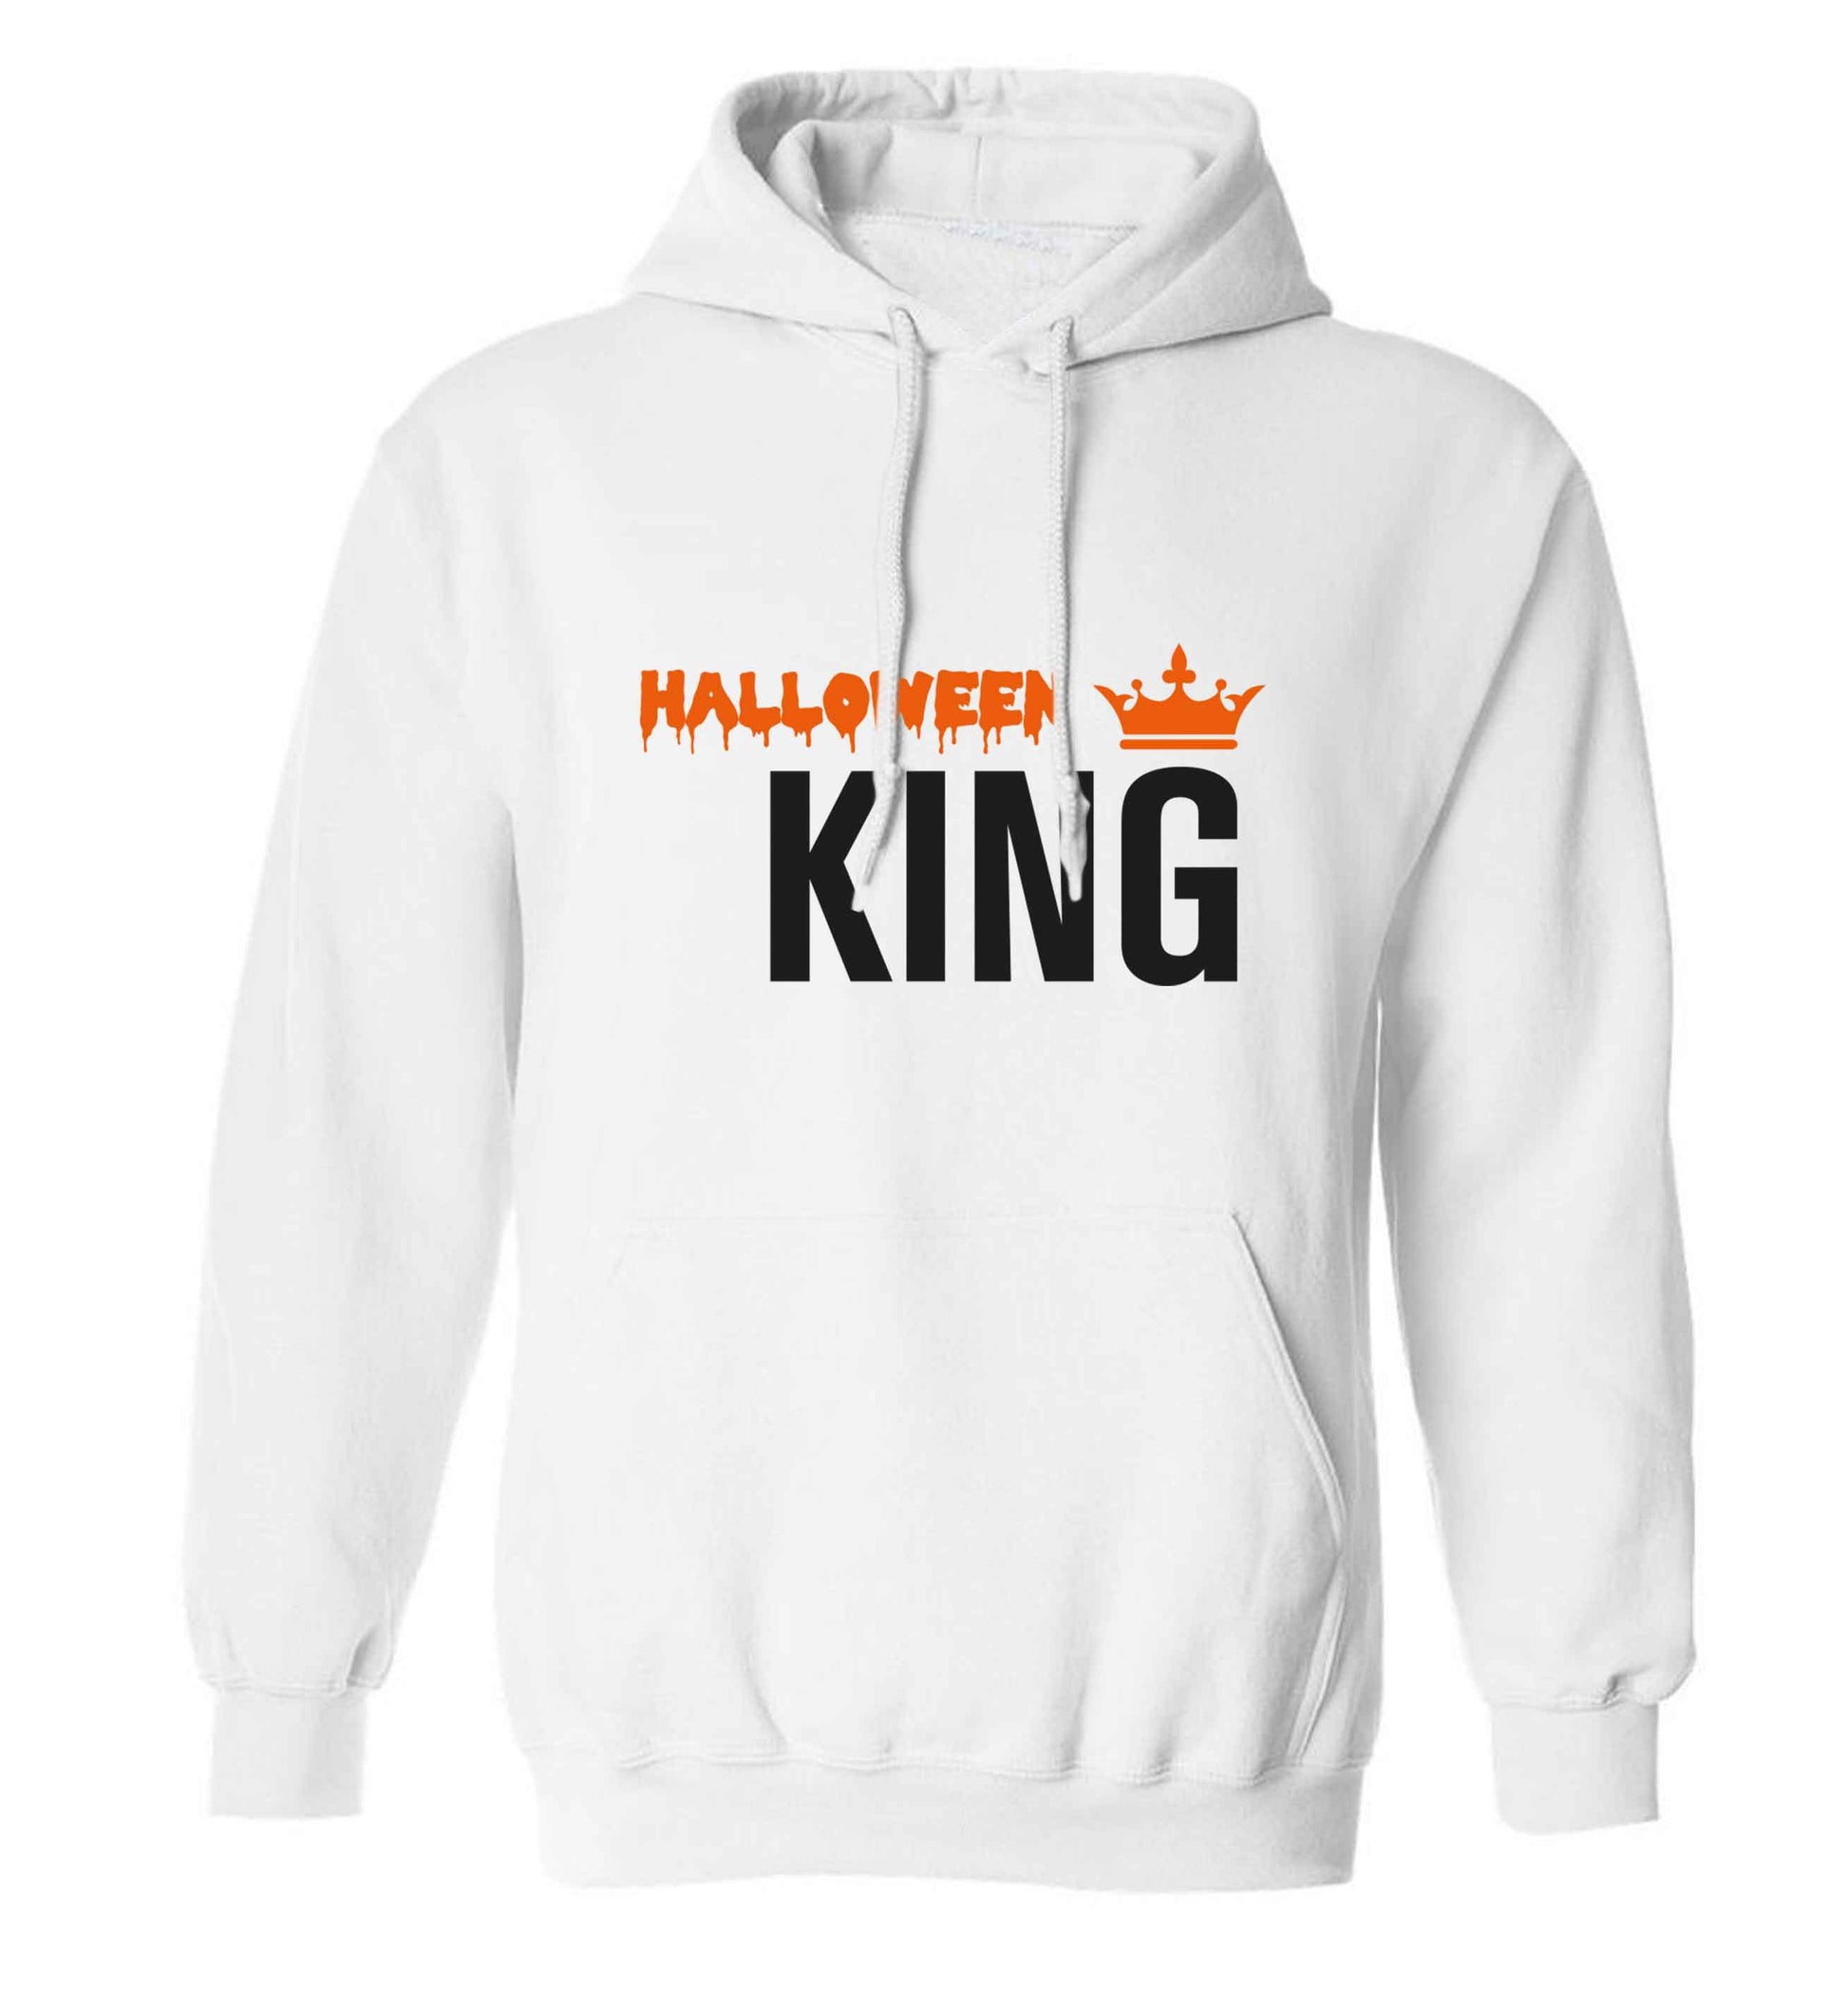 Halloween king adults unisex white hoodie 2XL